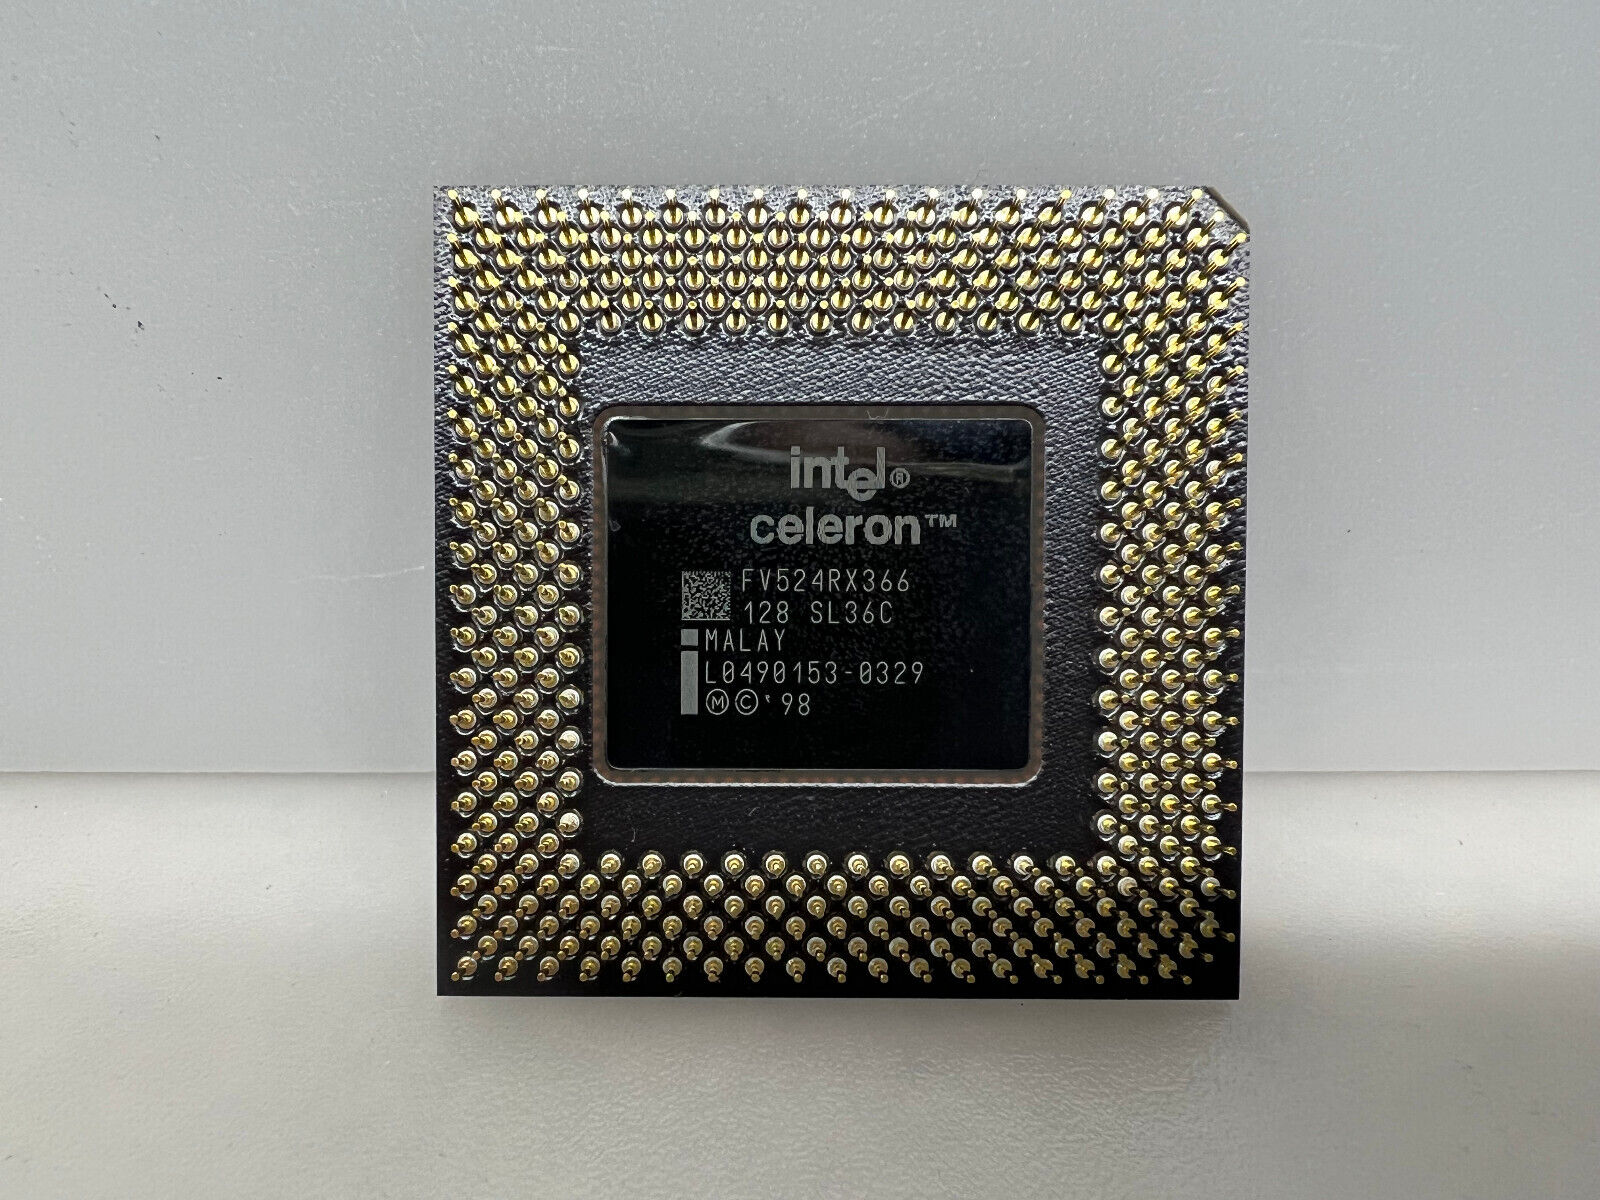 Intel Celeron 366MHz Socket 370 CPU 